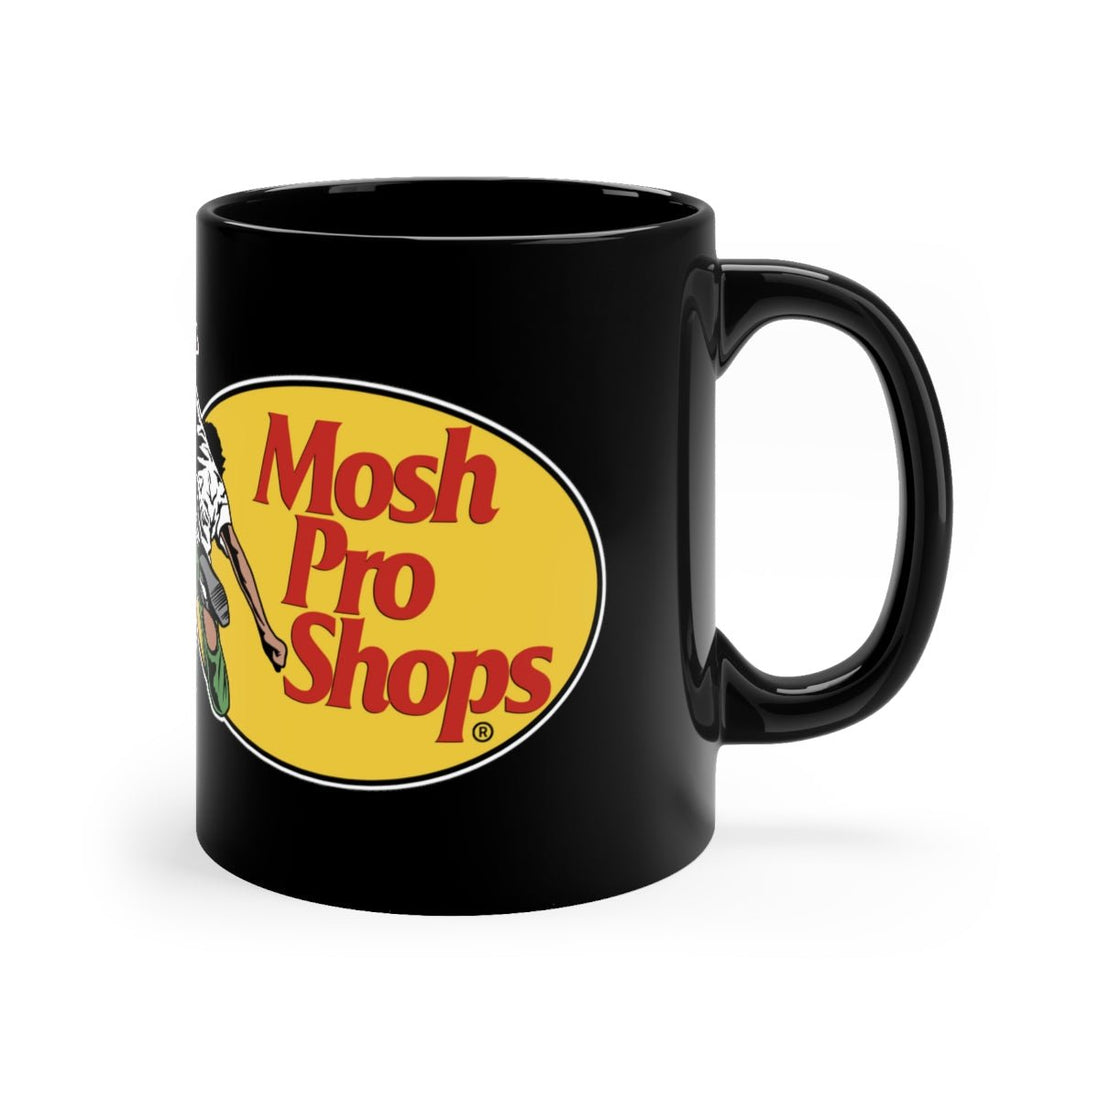 Mosh Pro Shop 11oz Black Mug